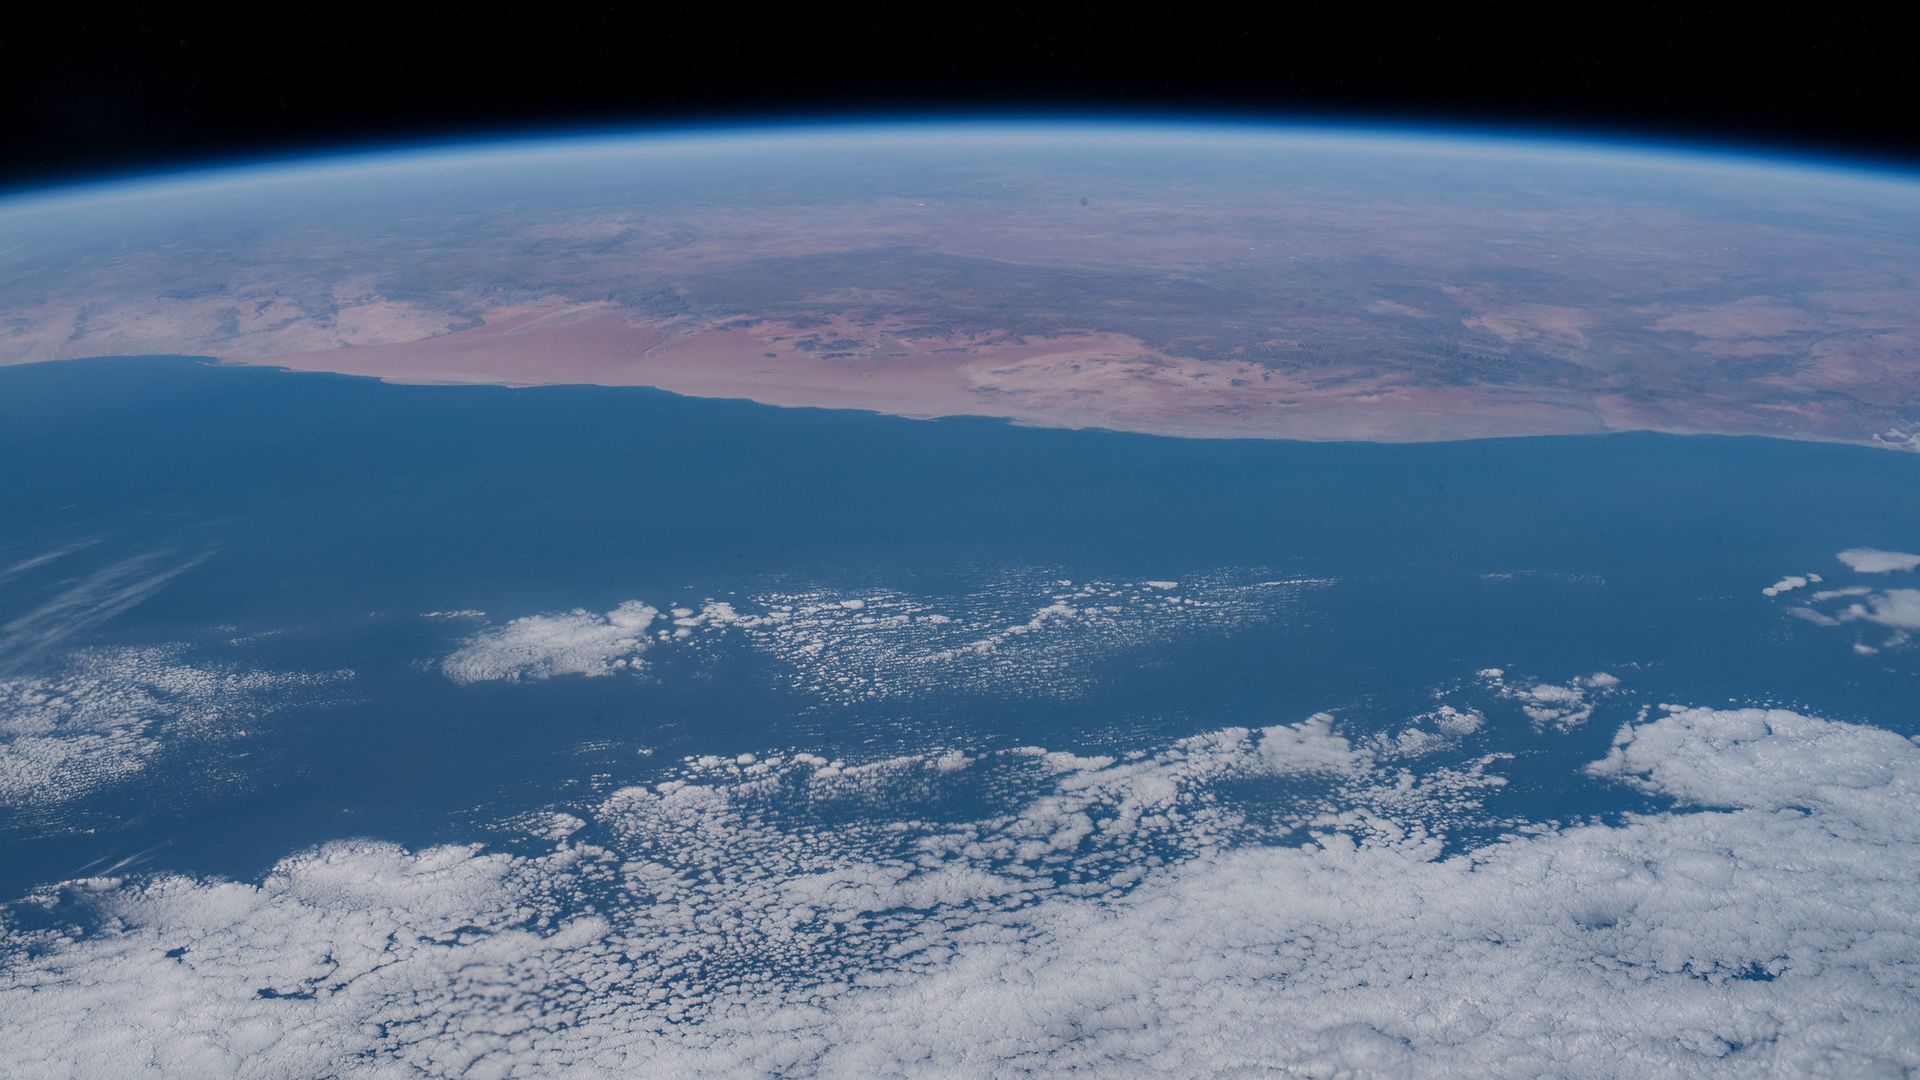 Earth as seen from orbit. Photo: NASA